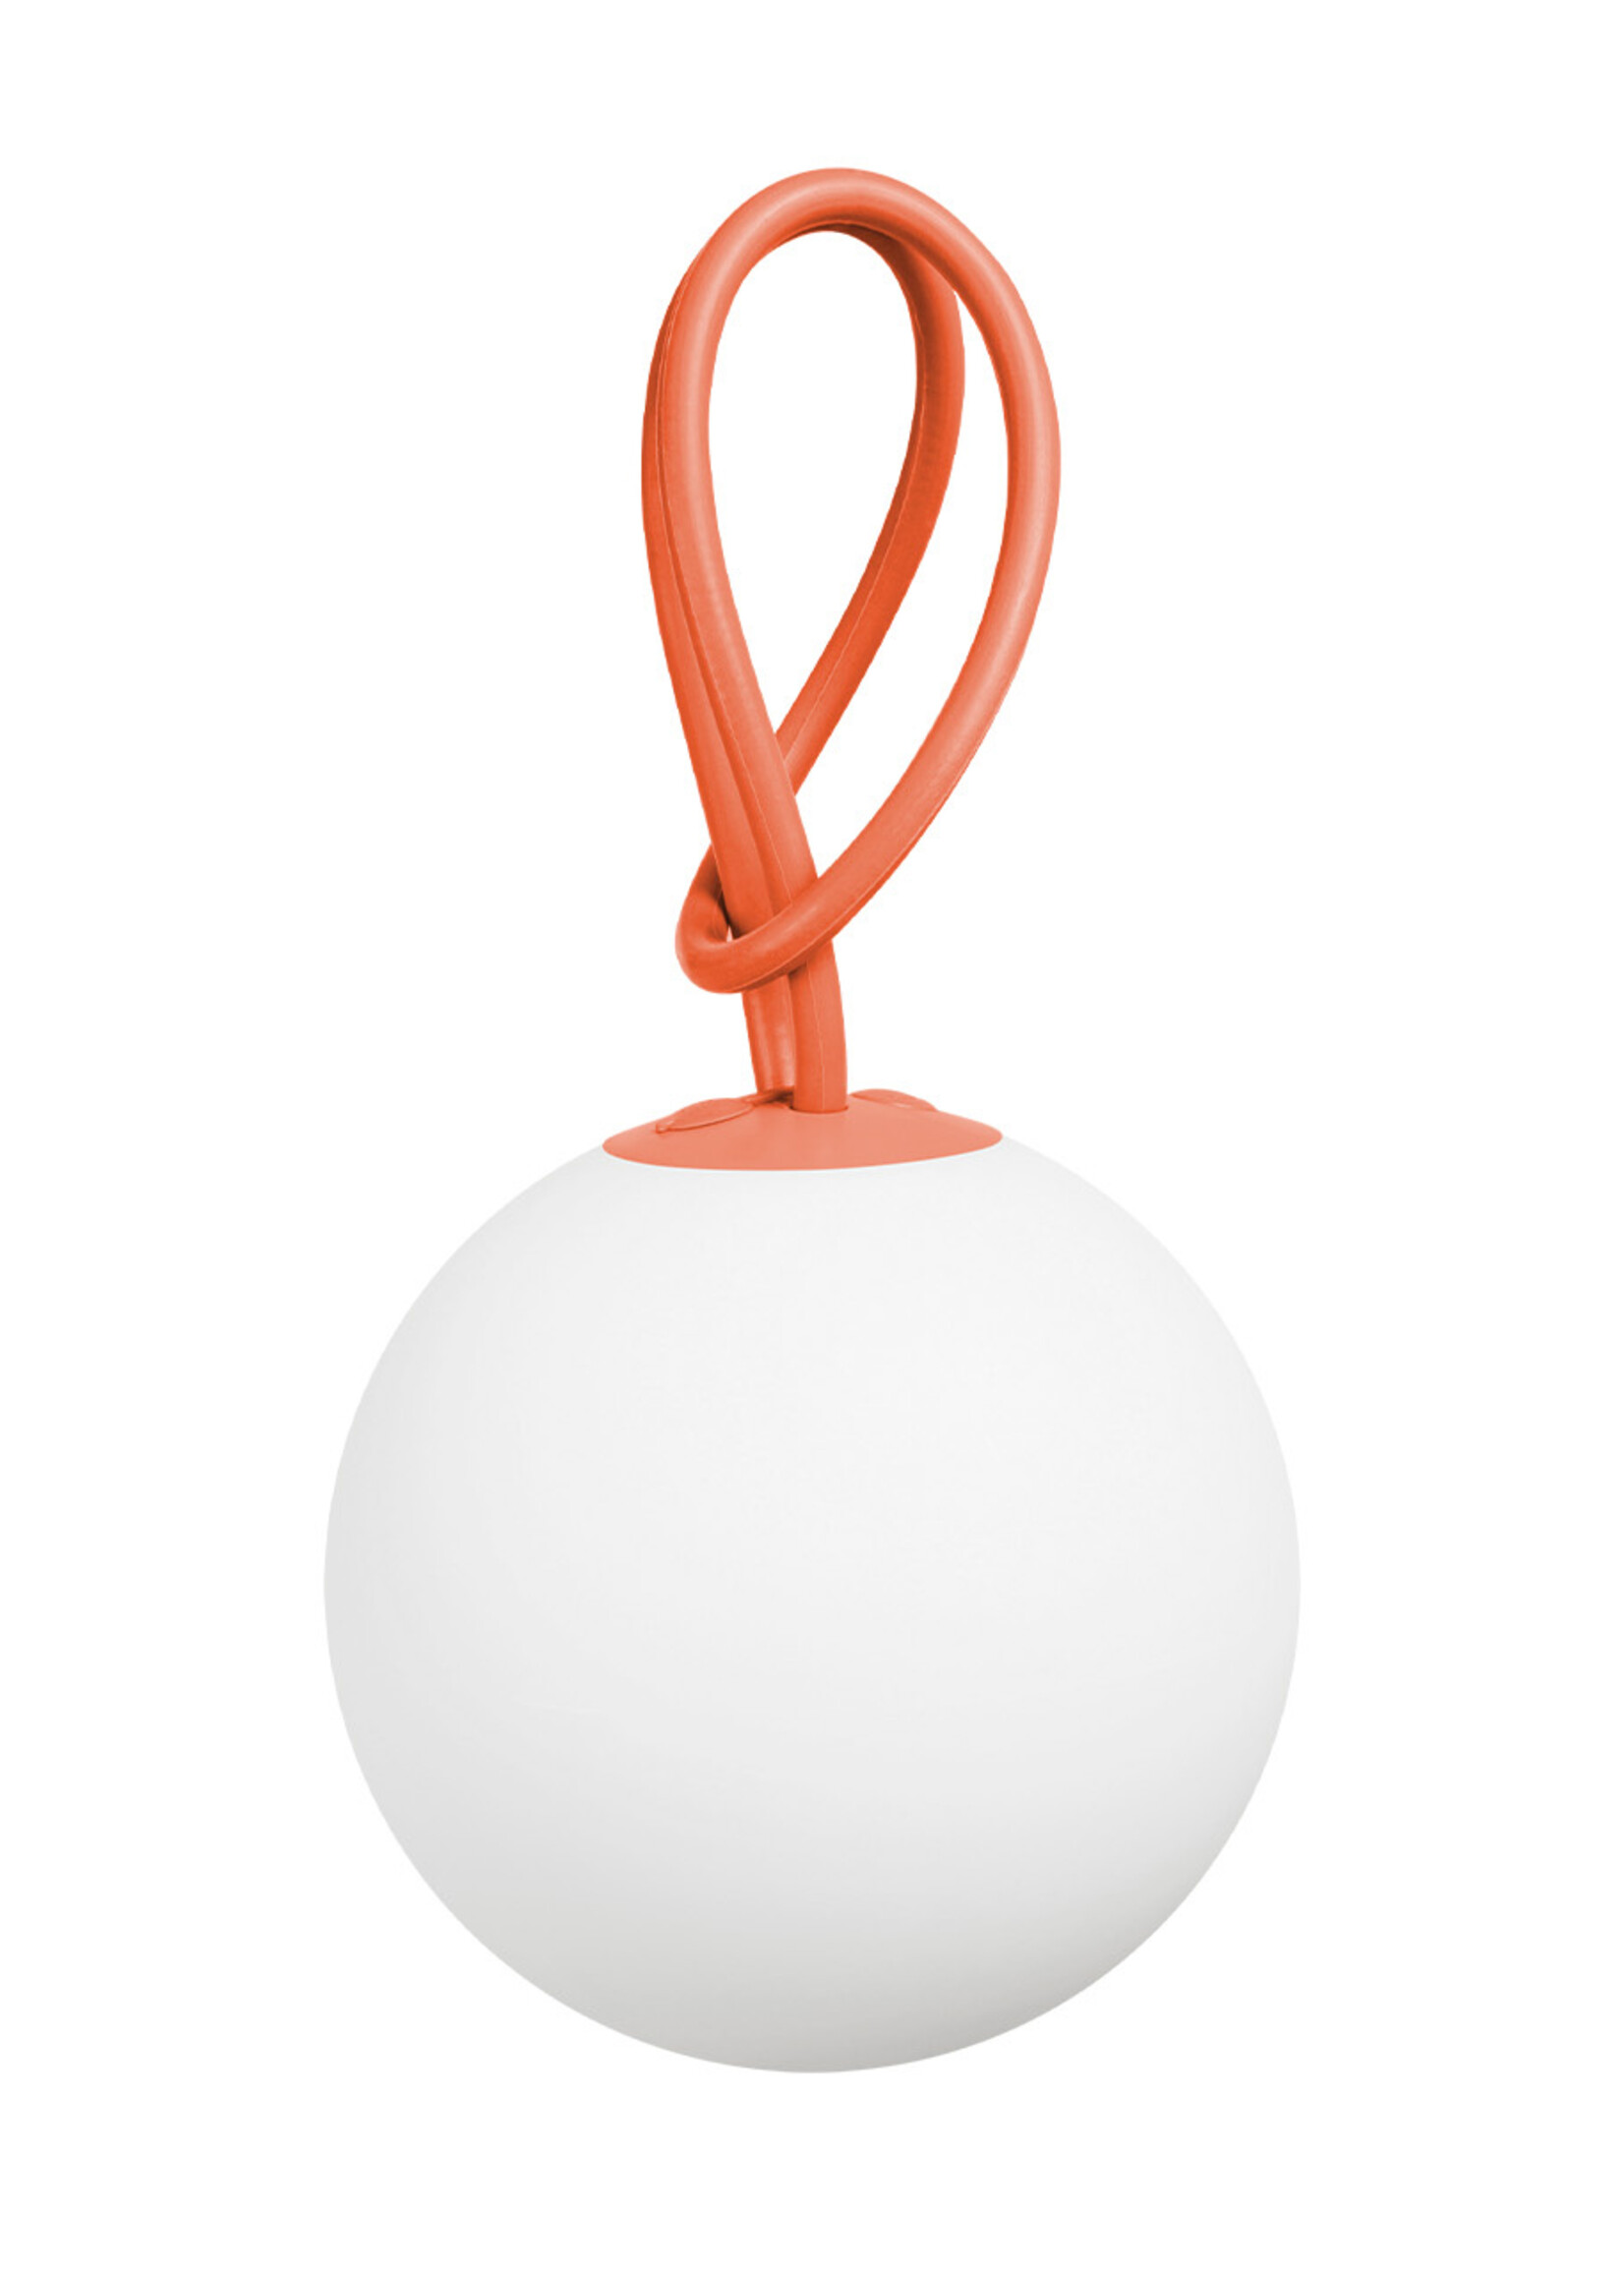 Fatboy - Bolleke - DUOPACK - Lampe suspendue - Rechargeable - Tangerine (orange tangerine) - lot de 2